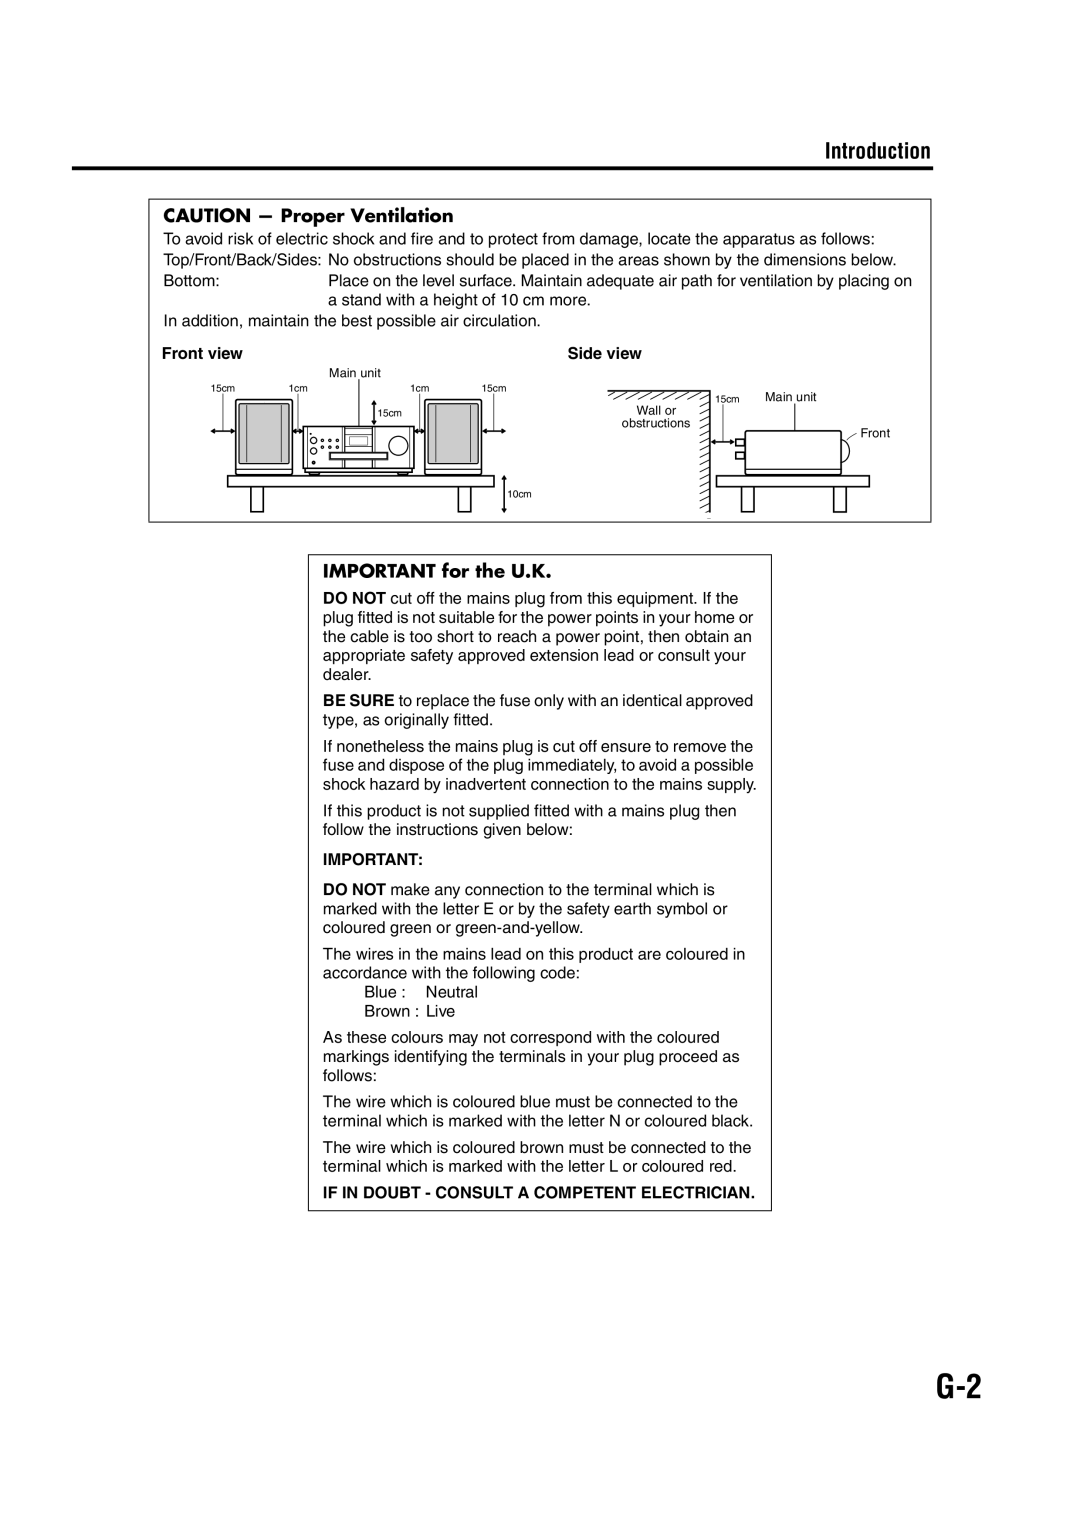 JVC LVT1284-004B manual Introduction, CAUTION - Proper Ventilation, IMPORTANT for the U.K, Front view, Side view 